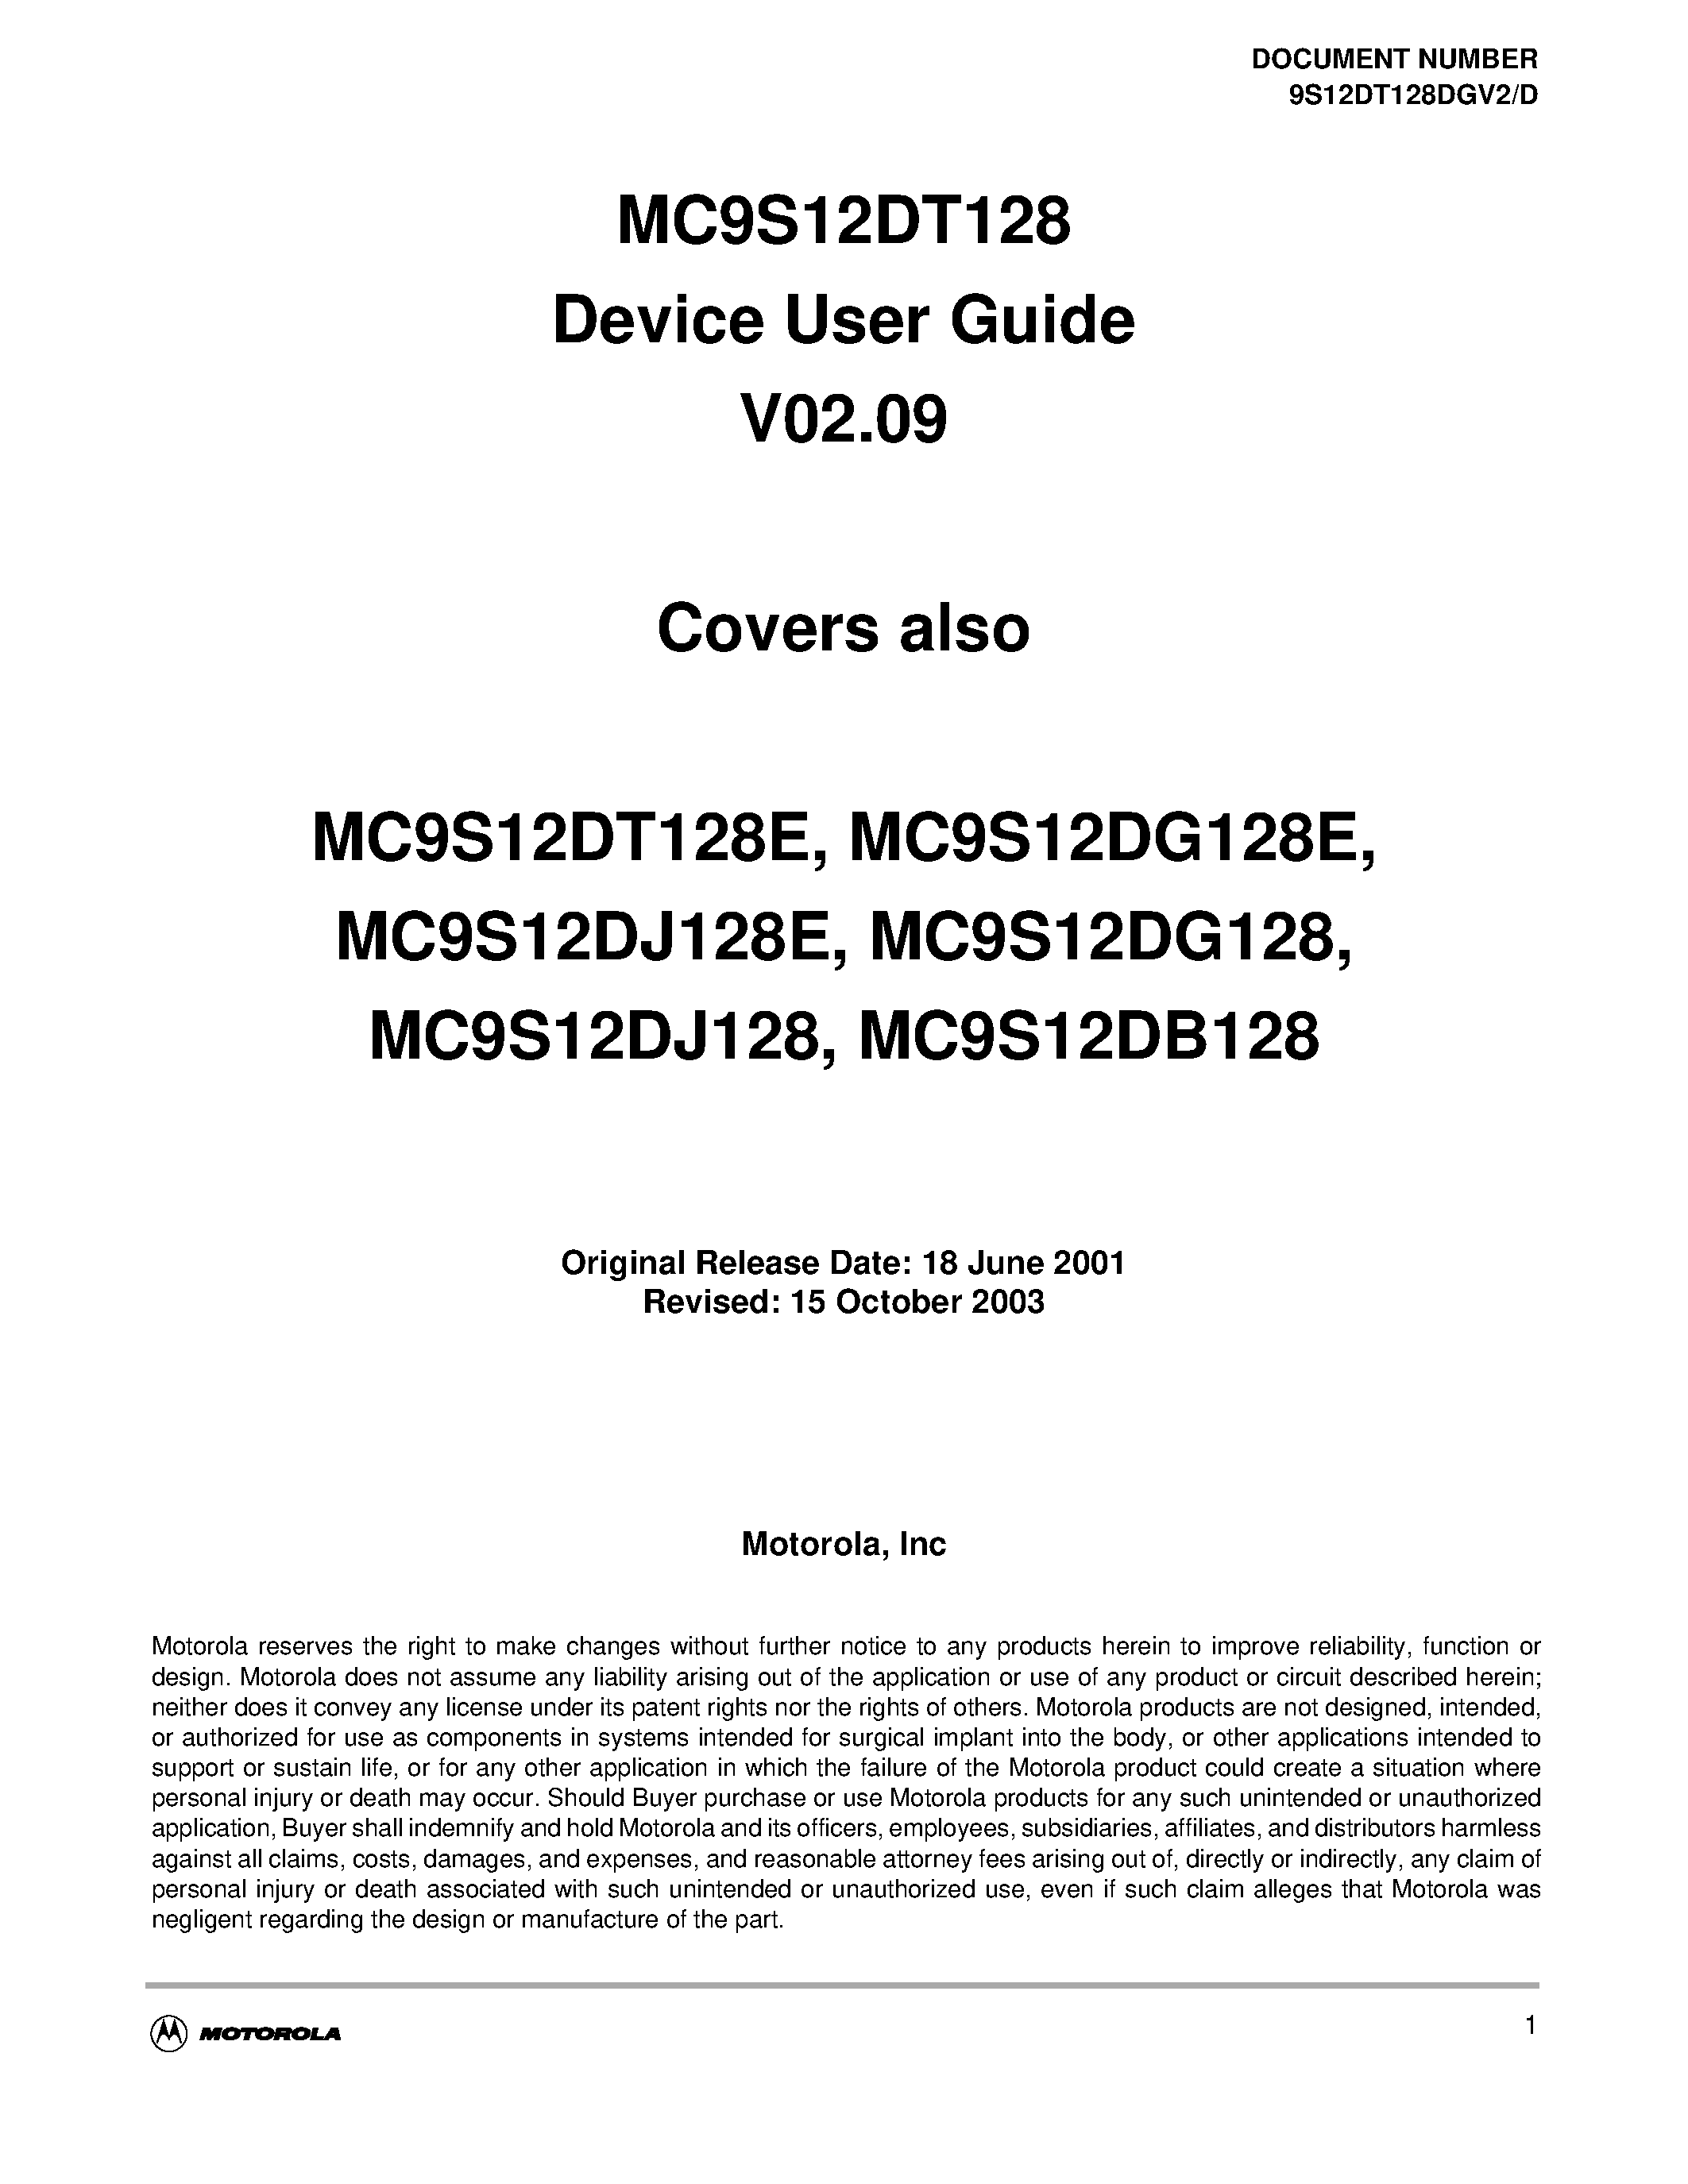 Даташит S12ECT16B8CV1D - MC9S12DT128 Device User Guide V02.09 страница 1